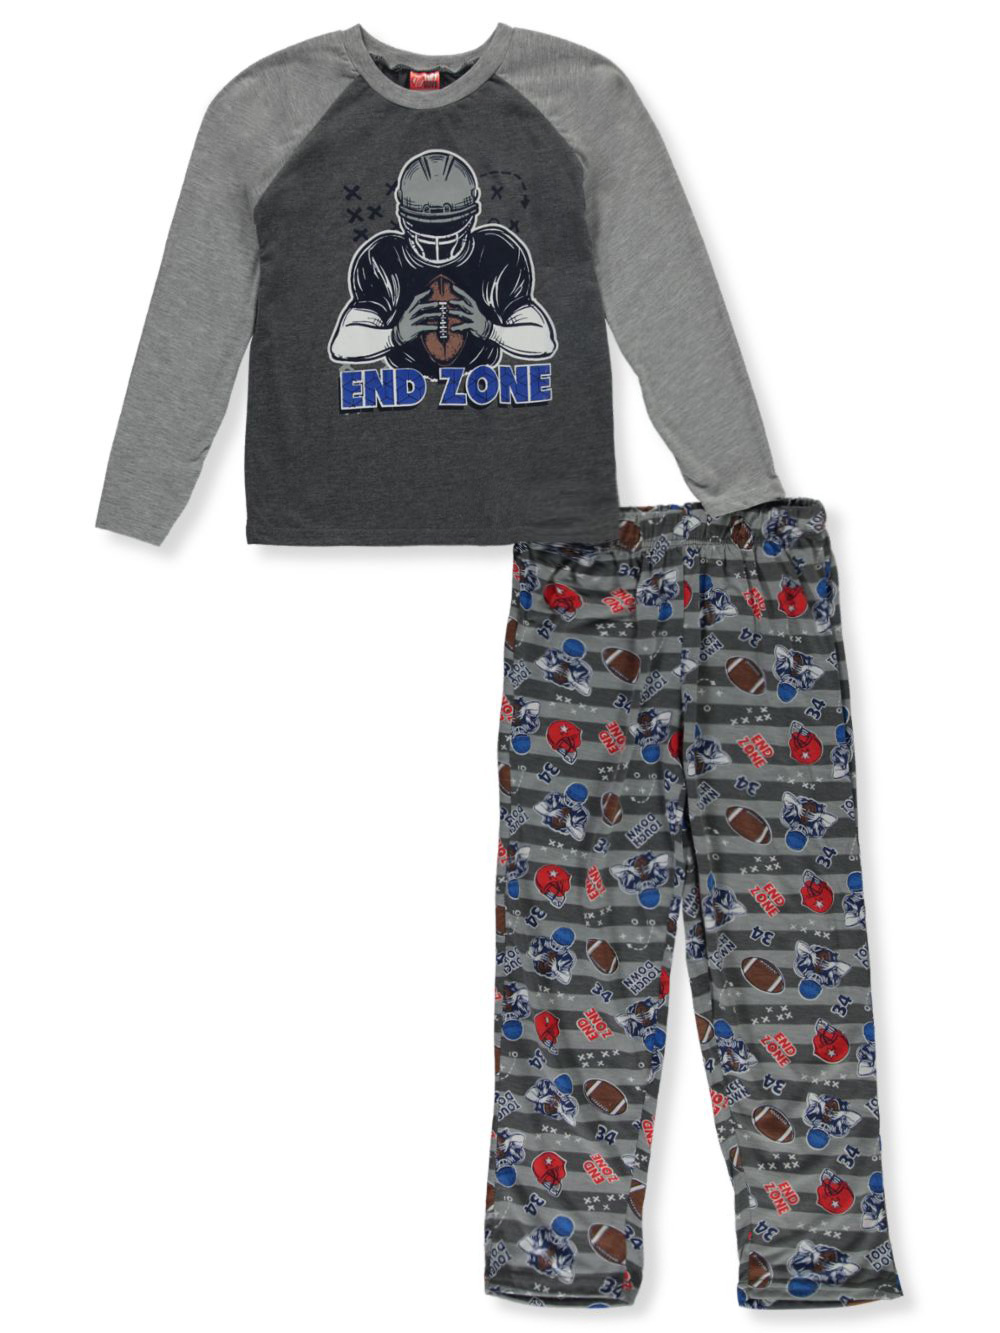 Tuff Guys Boys Sleepwear Micro-Fleece PJ Pajama Bottoms Pants Set 4 Pack